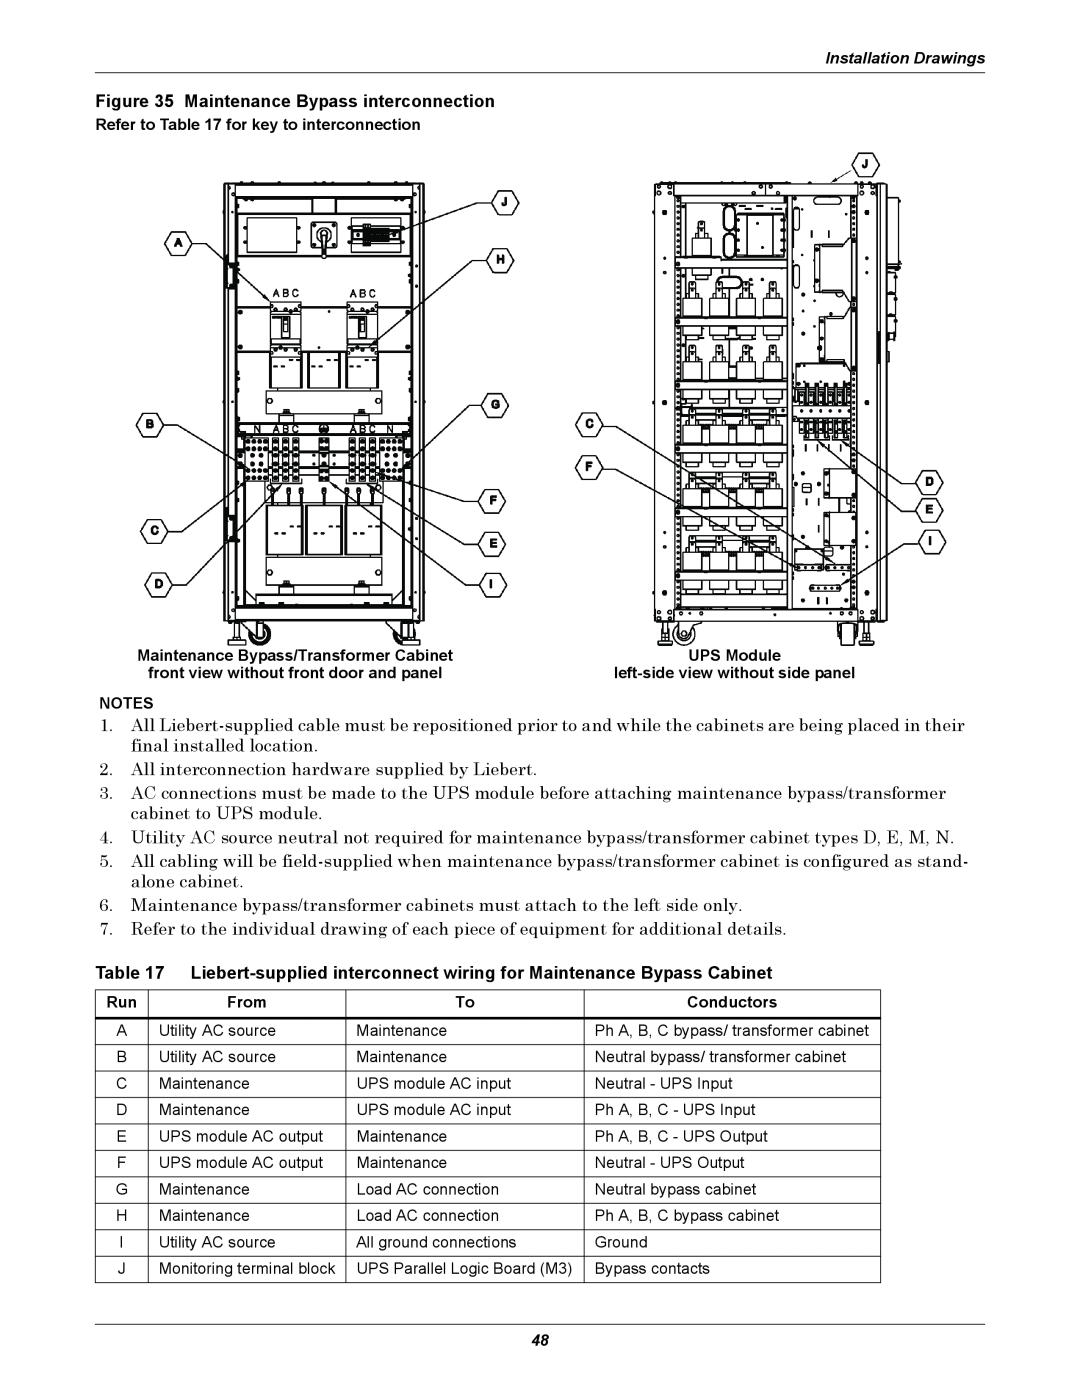 Emerson 10-30kVA, 208V installation manual Maintenance Bypass interconnection, Installation Drawings 